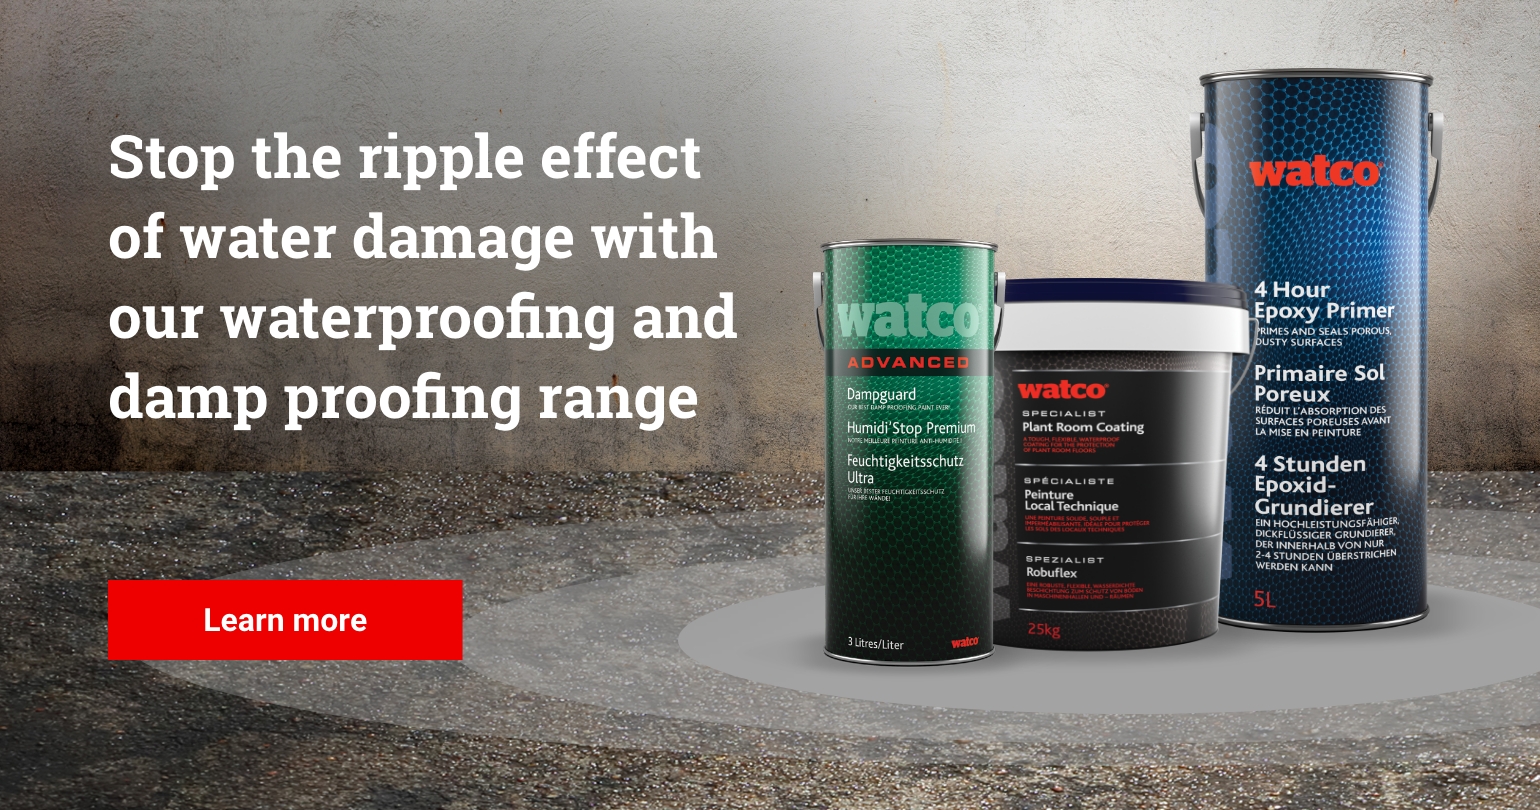 Waterproofing and damp proofing range